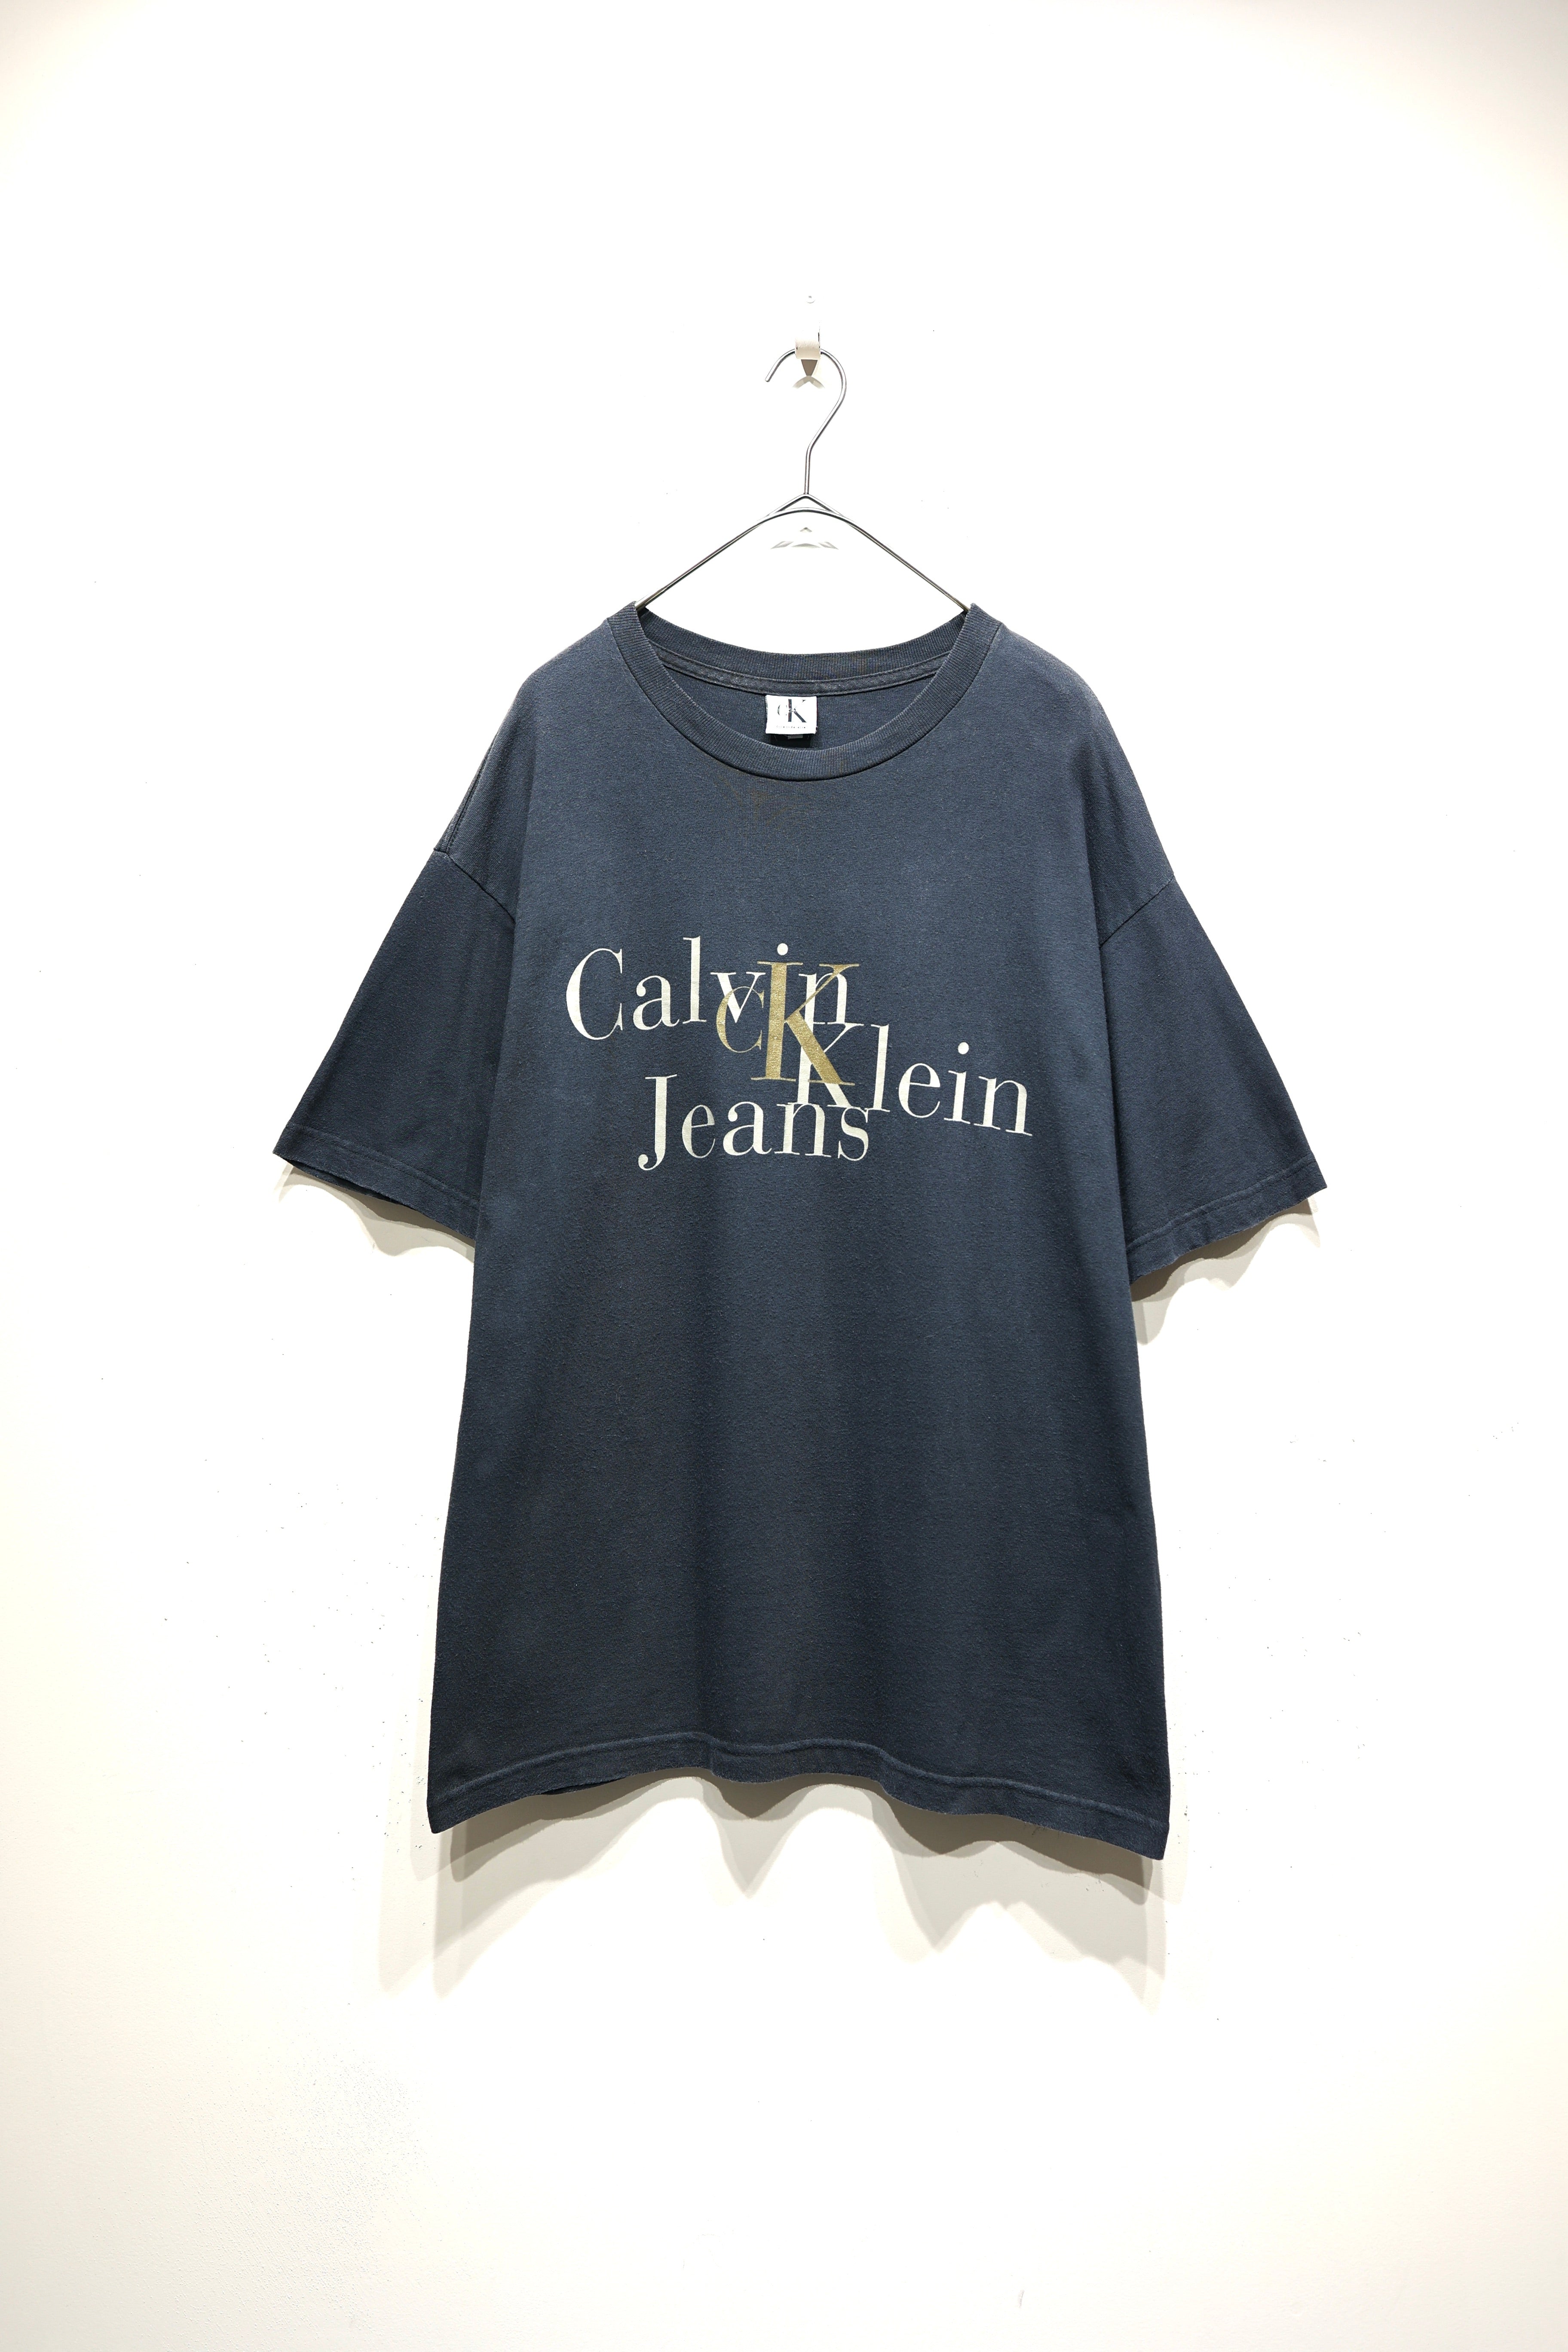 90's CALVIN KLEIN JEANS graphic print t-shirt